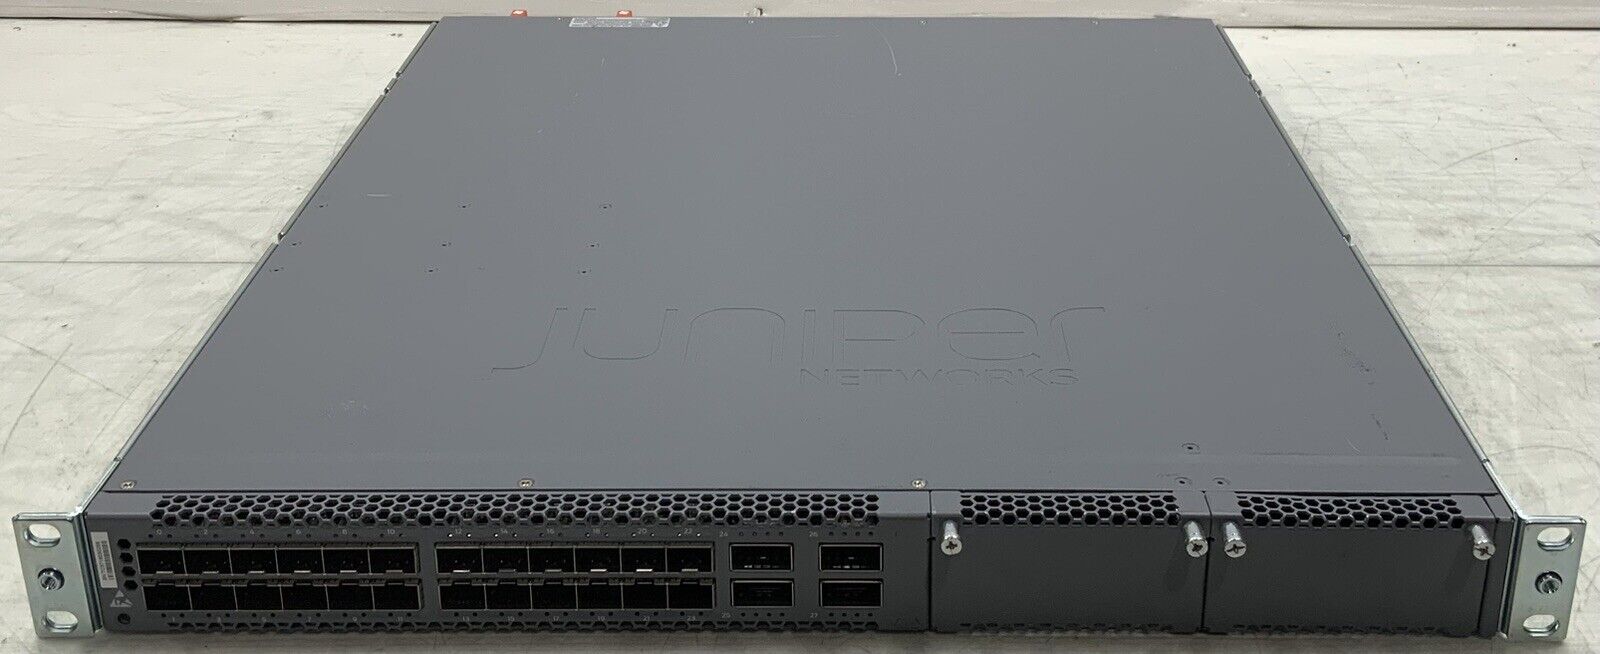 Juniper EX4600-40F-AFI 24 SFP+/SFP Ports 4 QSFP+ Ports Dual AC Missing 3 Fans